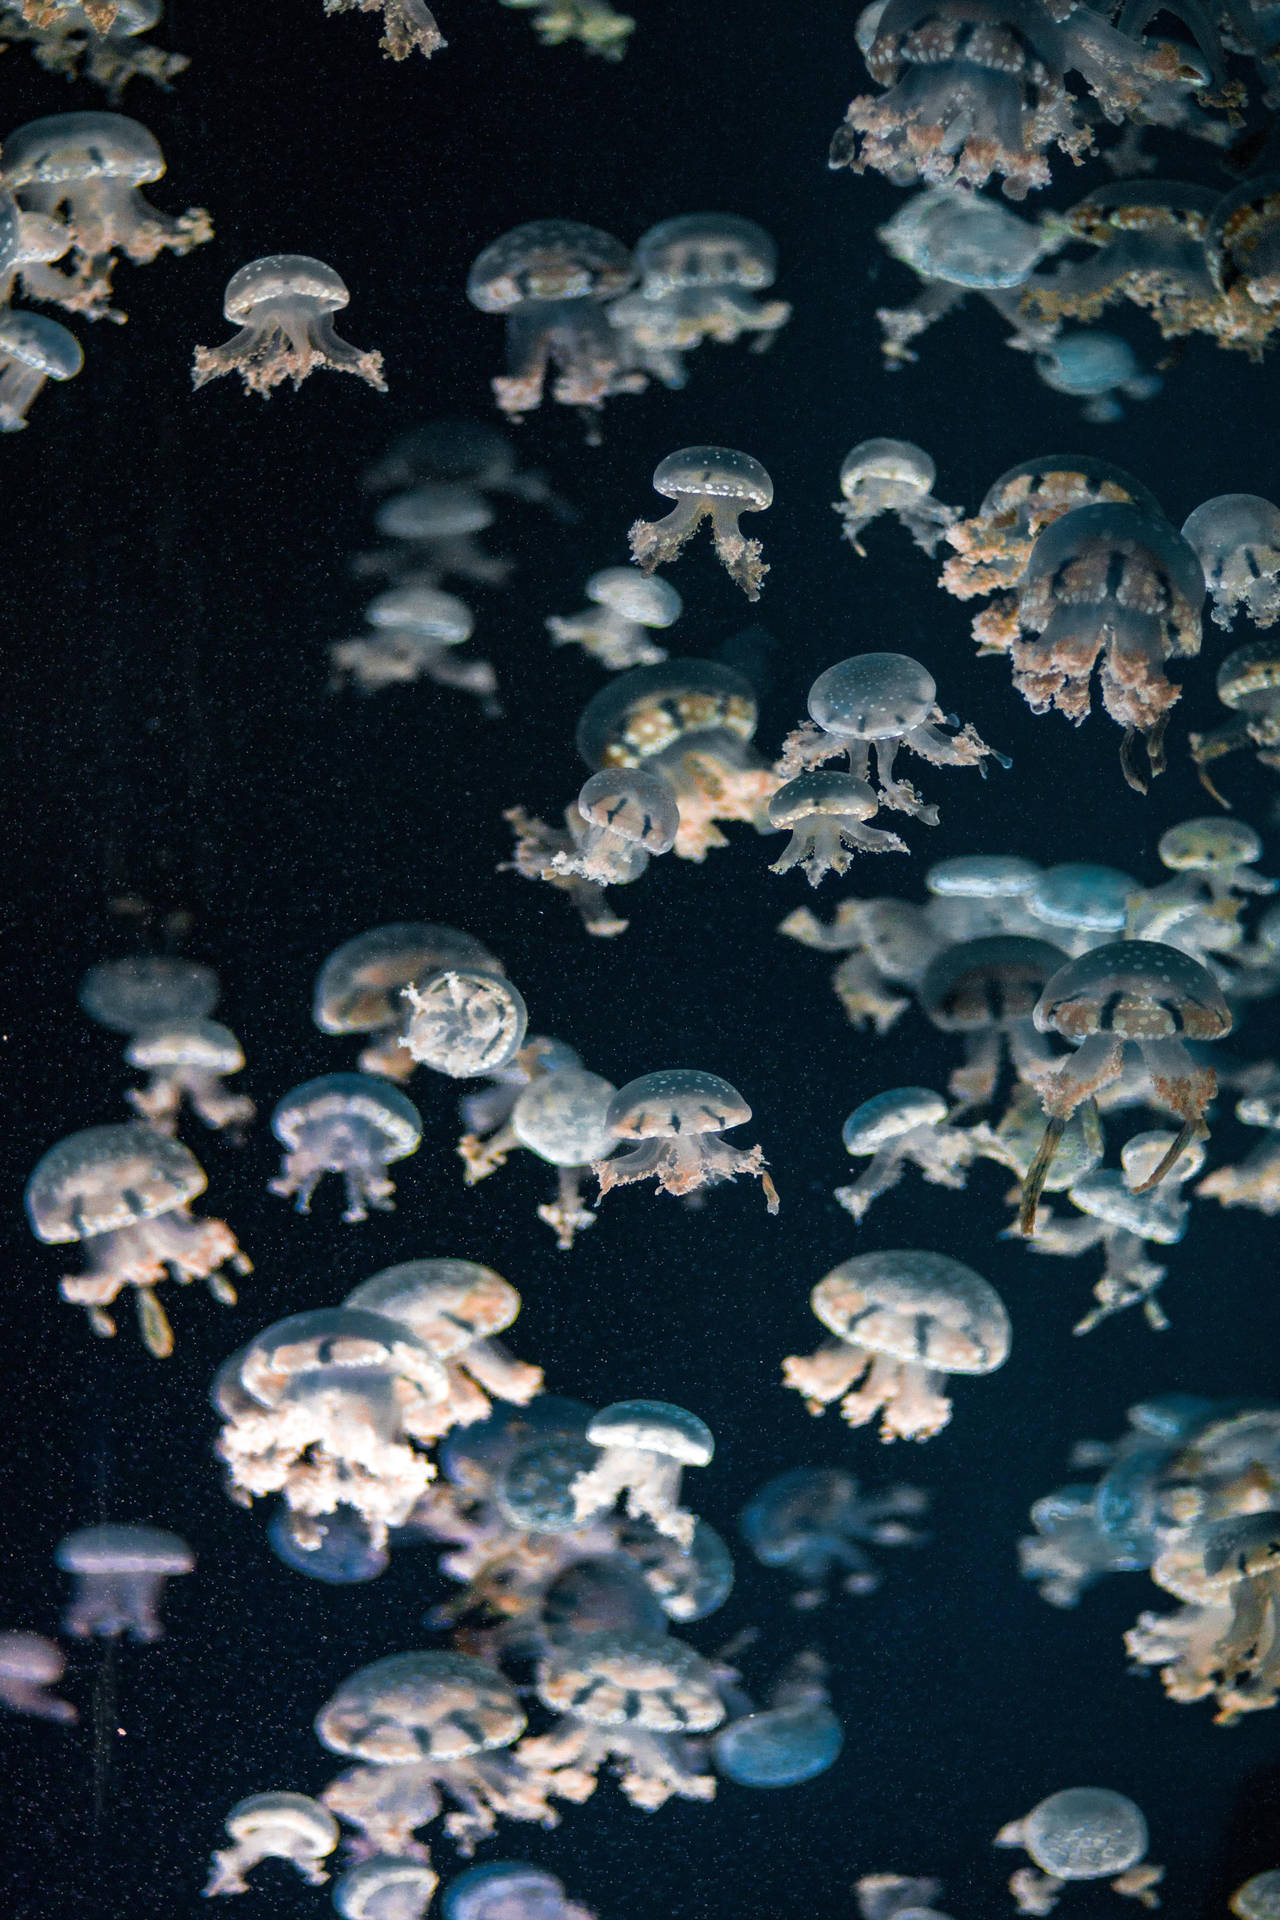 Caption: Captivating Vintage Aesthetic Jellyfish Image For Ipad.